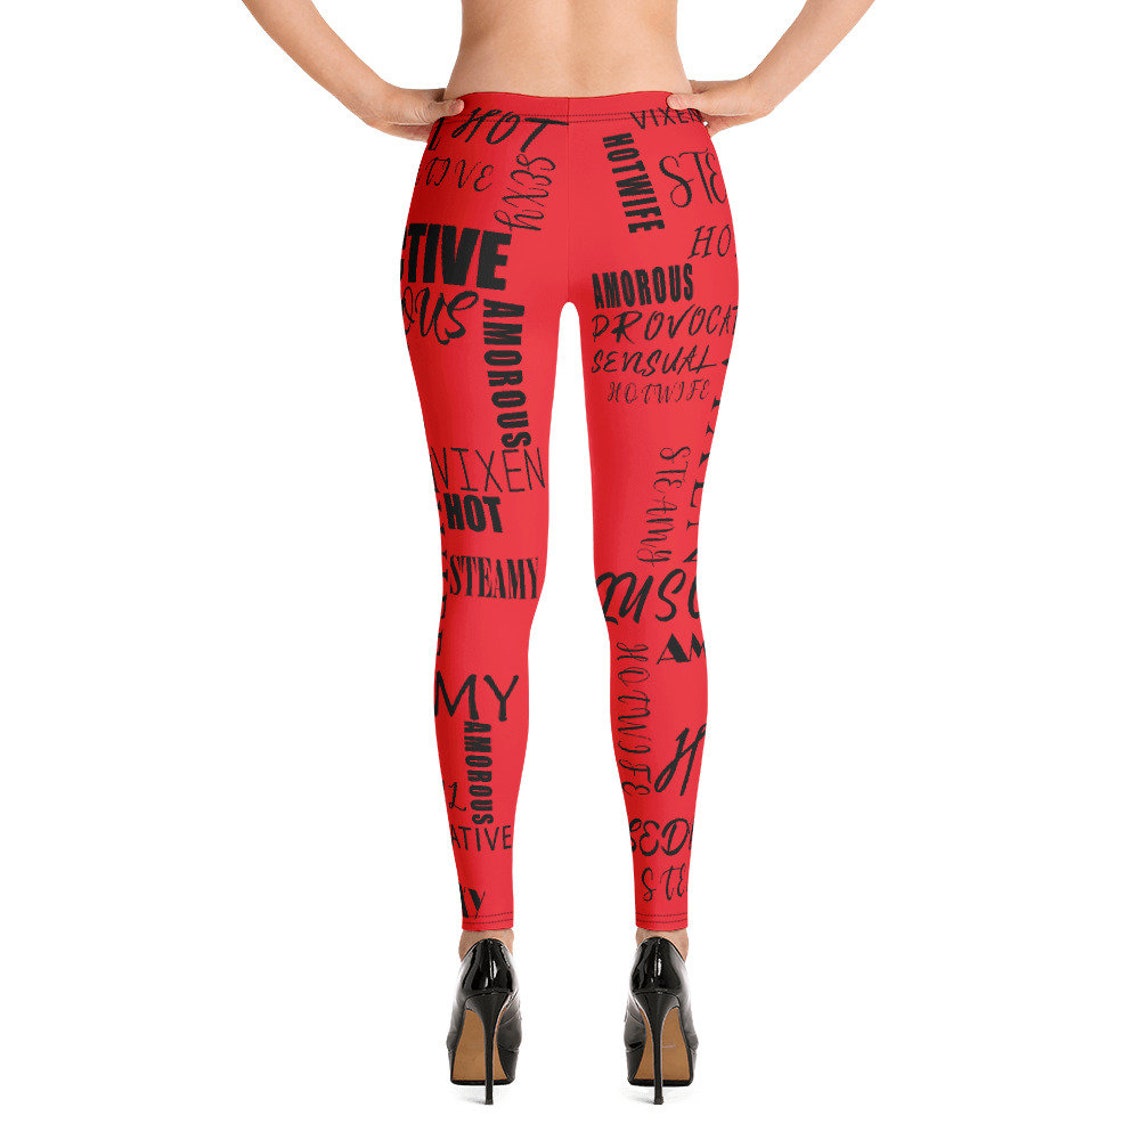 Sexy Hotwife Leggings in Red & Black. Hotwife vixen leggins | Etsy